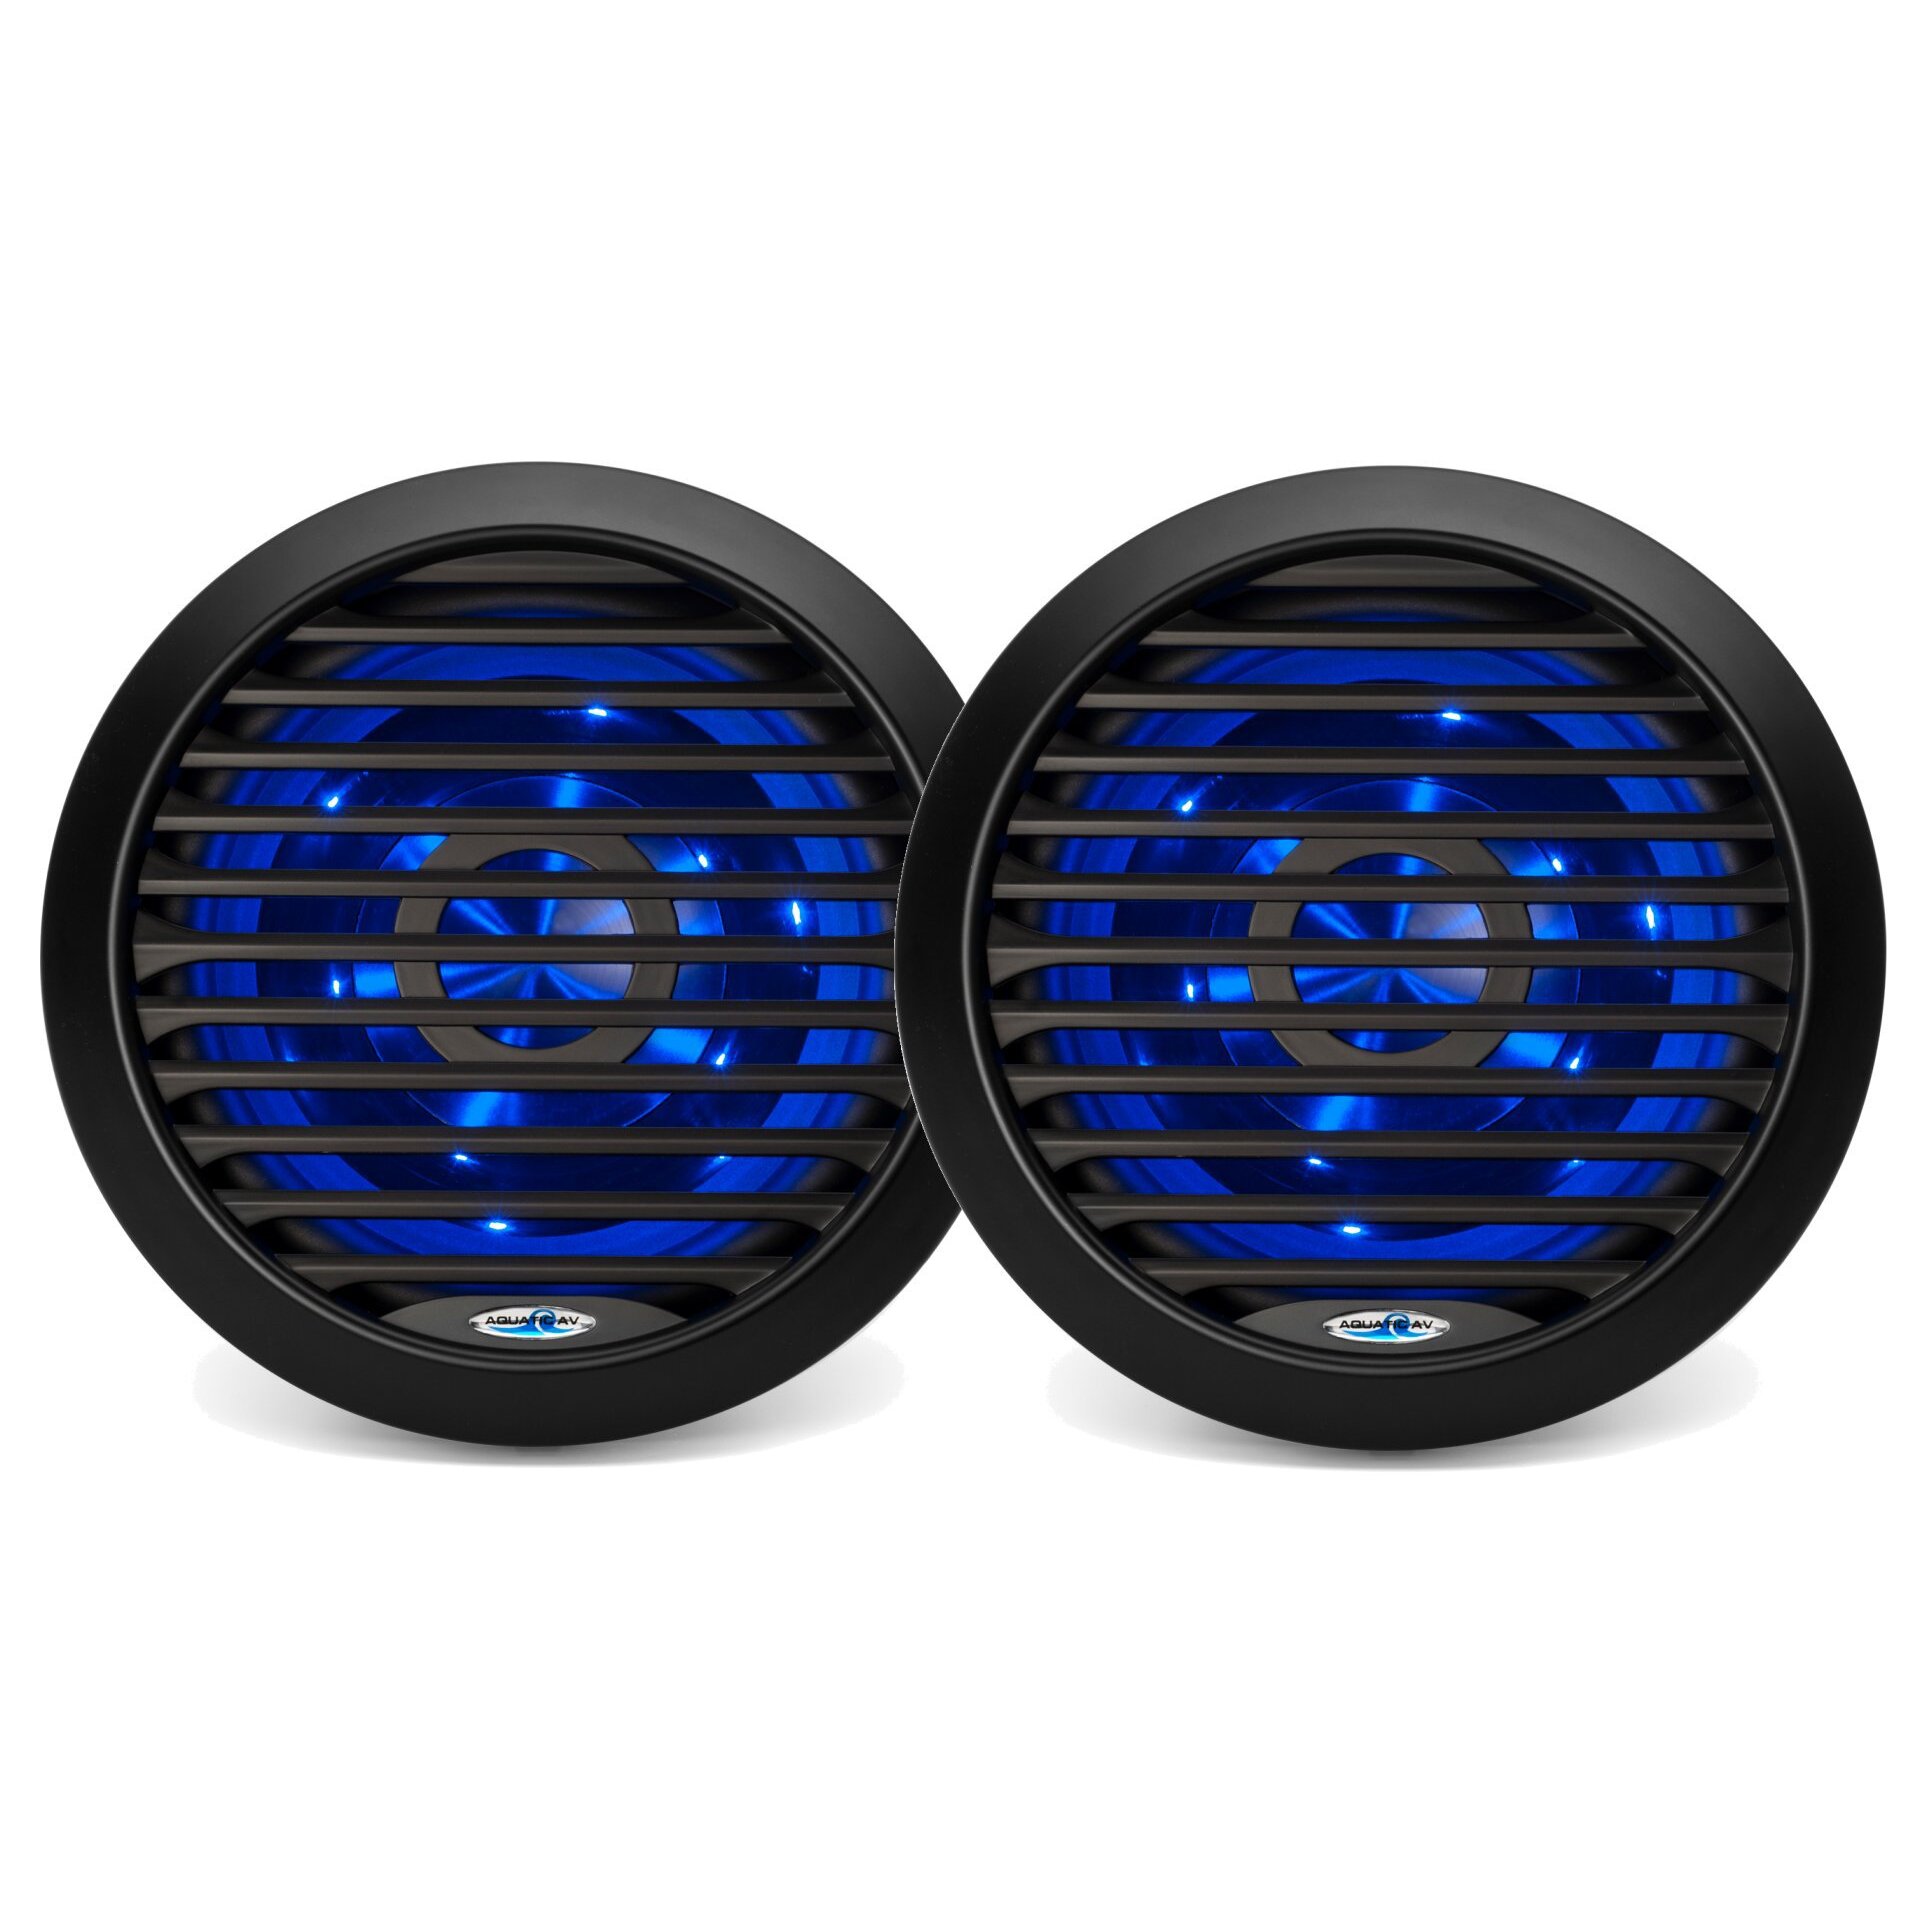 Aquatic AV PR122 Black 6.5" Pro Series 100 Watt Coaxial Waterproof Marine Speakers With LED Accent Lighting